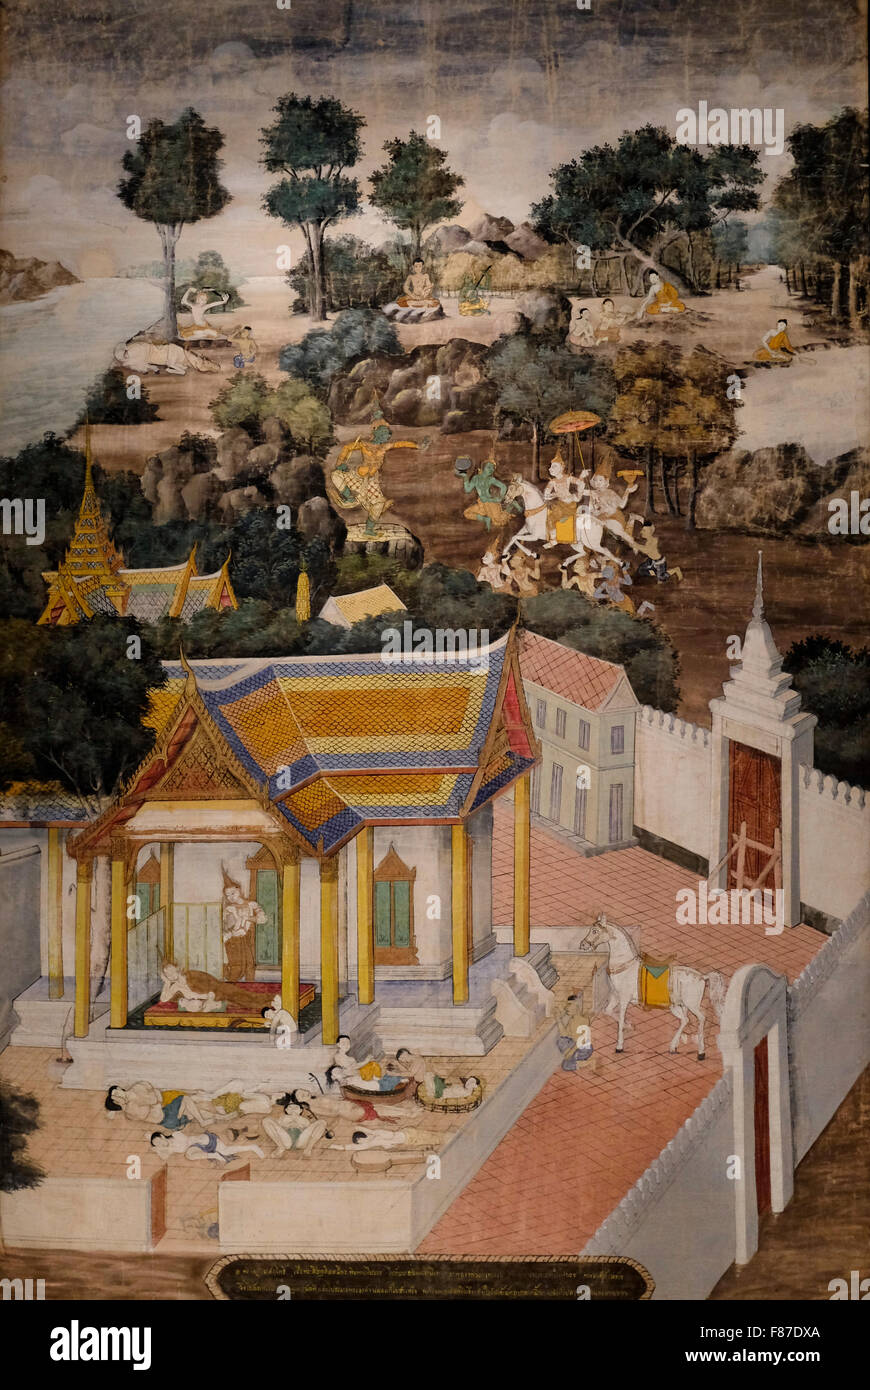 La vida del Buda - Tailandia - circa 1800 Foto de stock